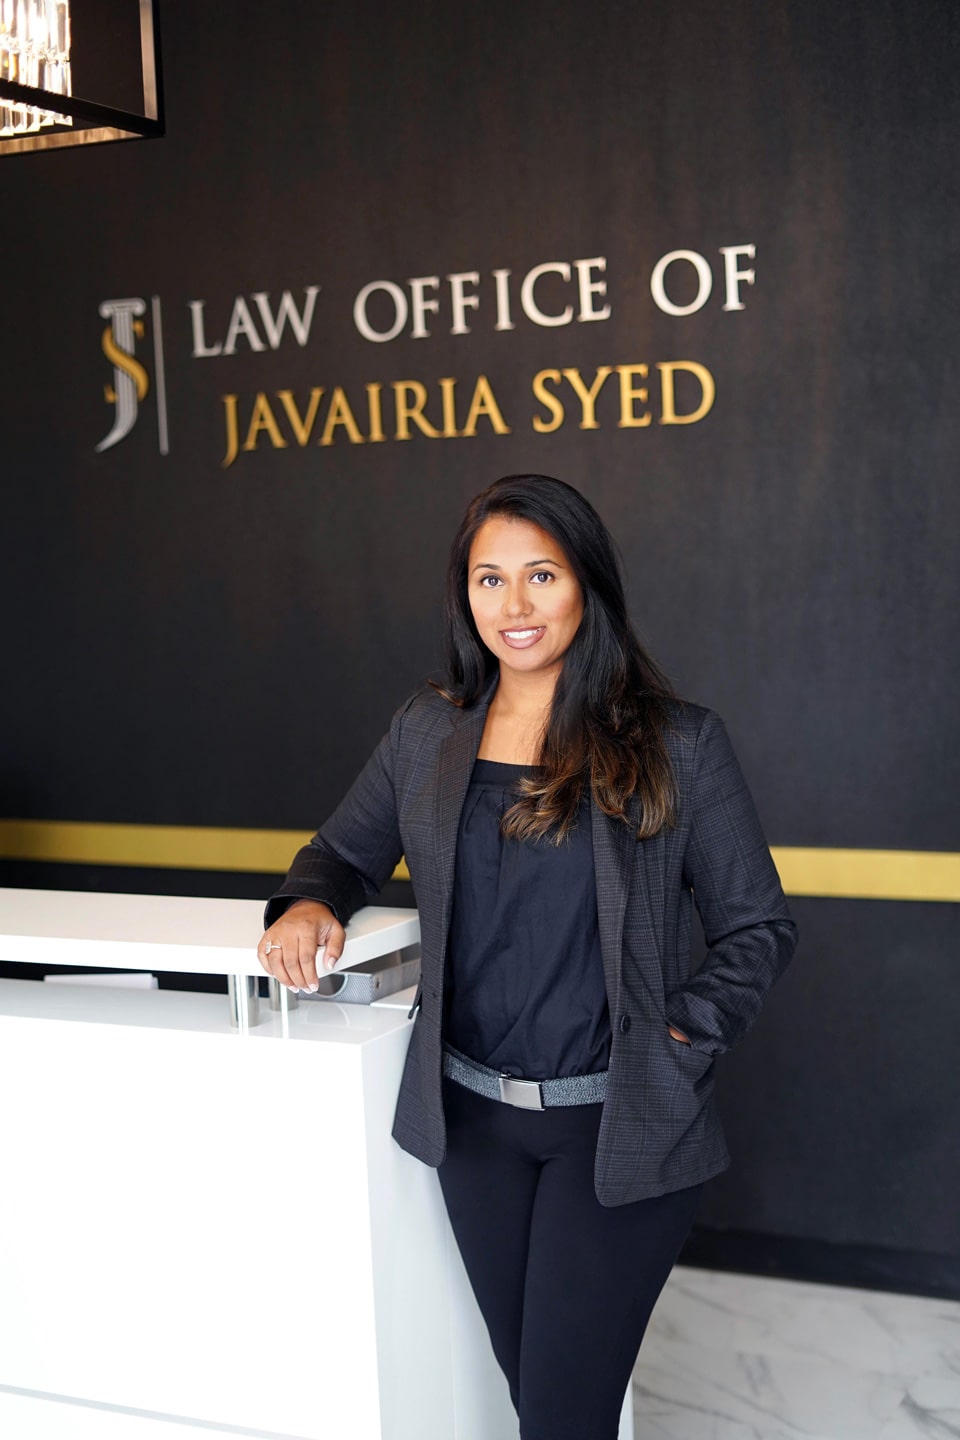 Javairia Syed - Attorney